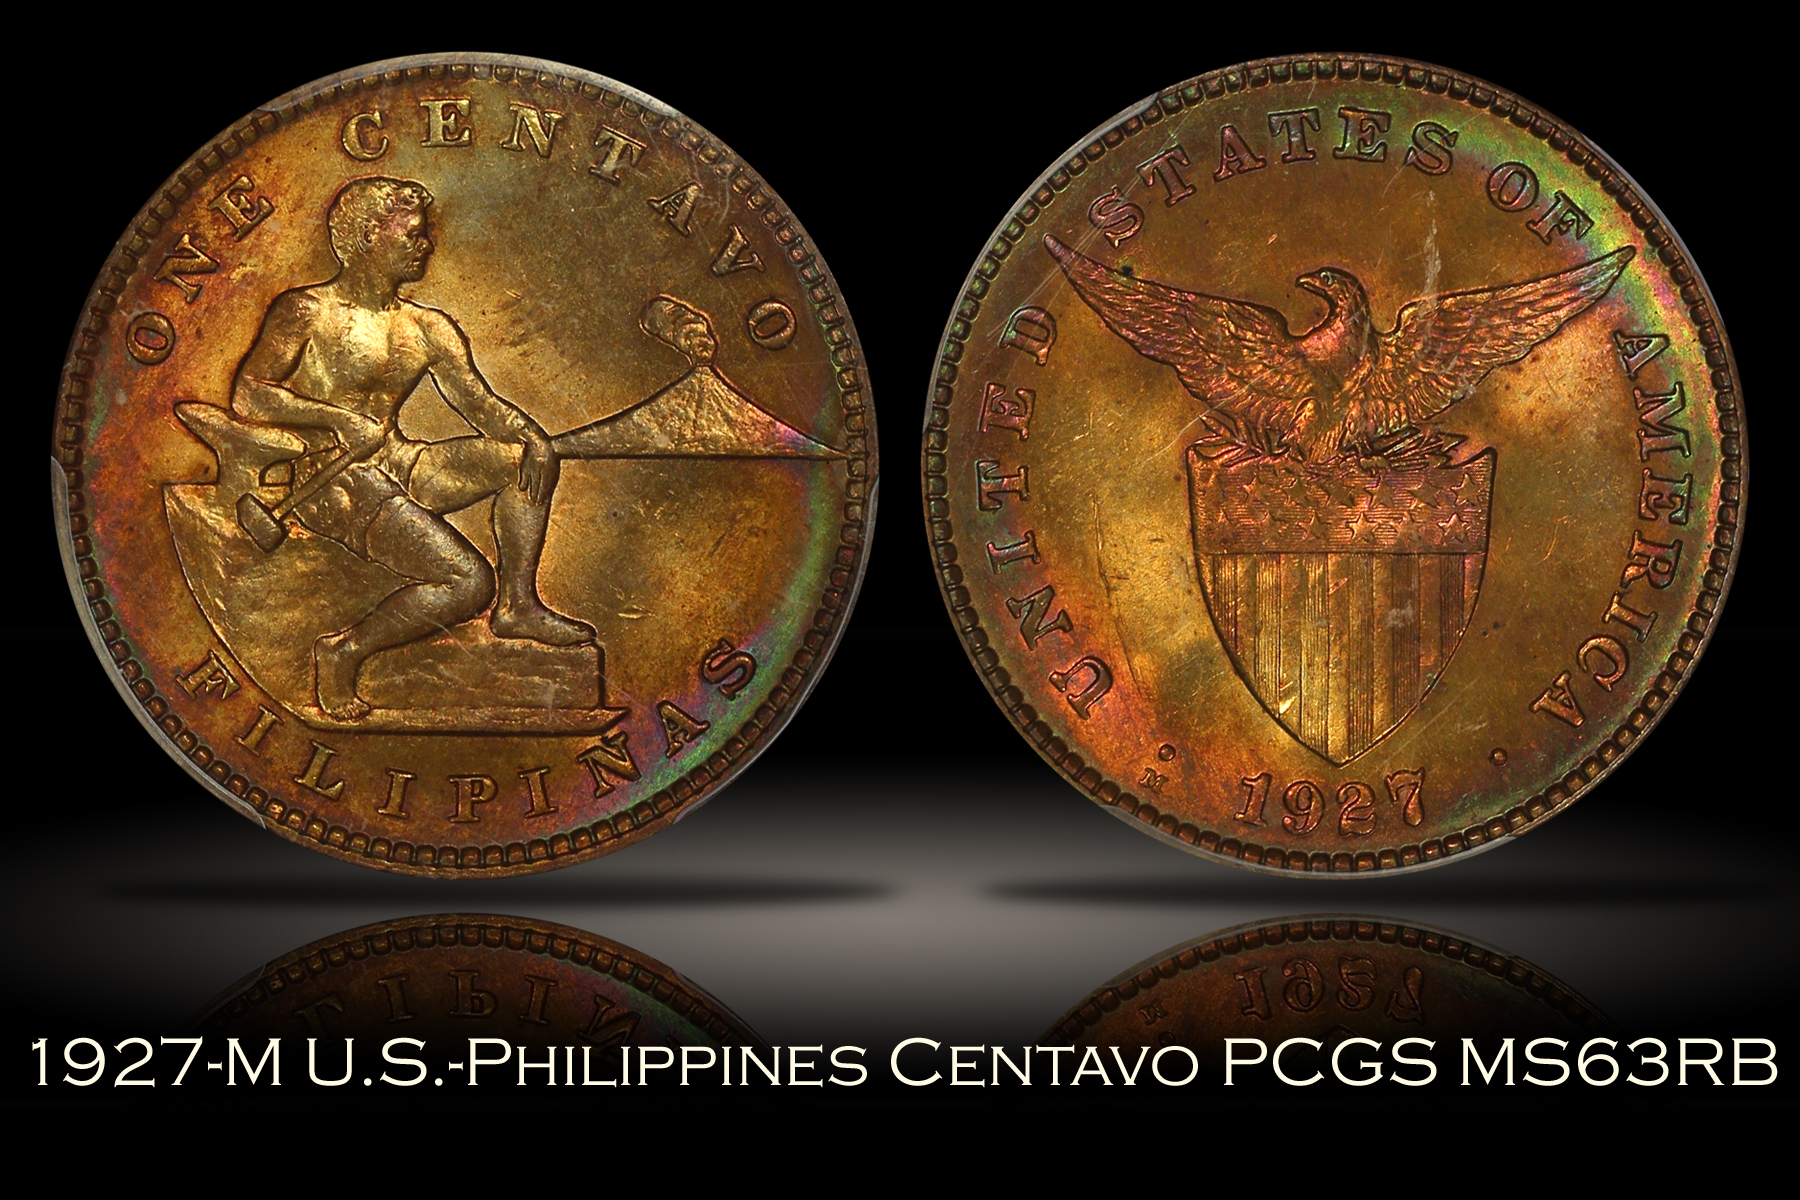 1927-M U.S.-Philippines One Centavo PCGS MS63RB